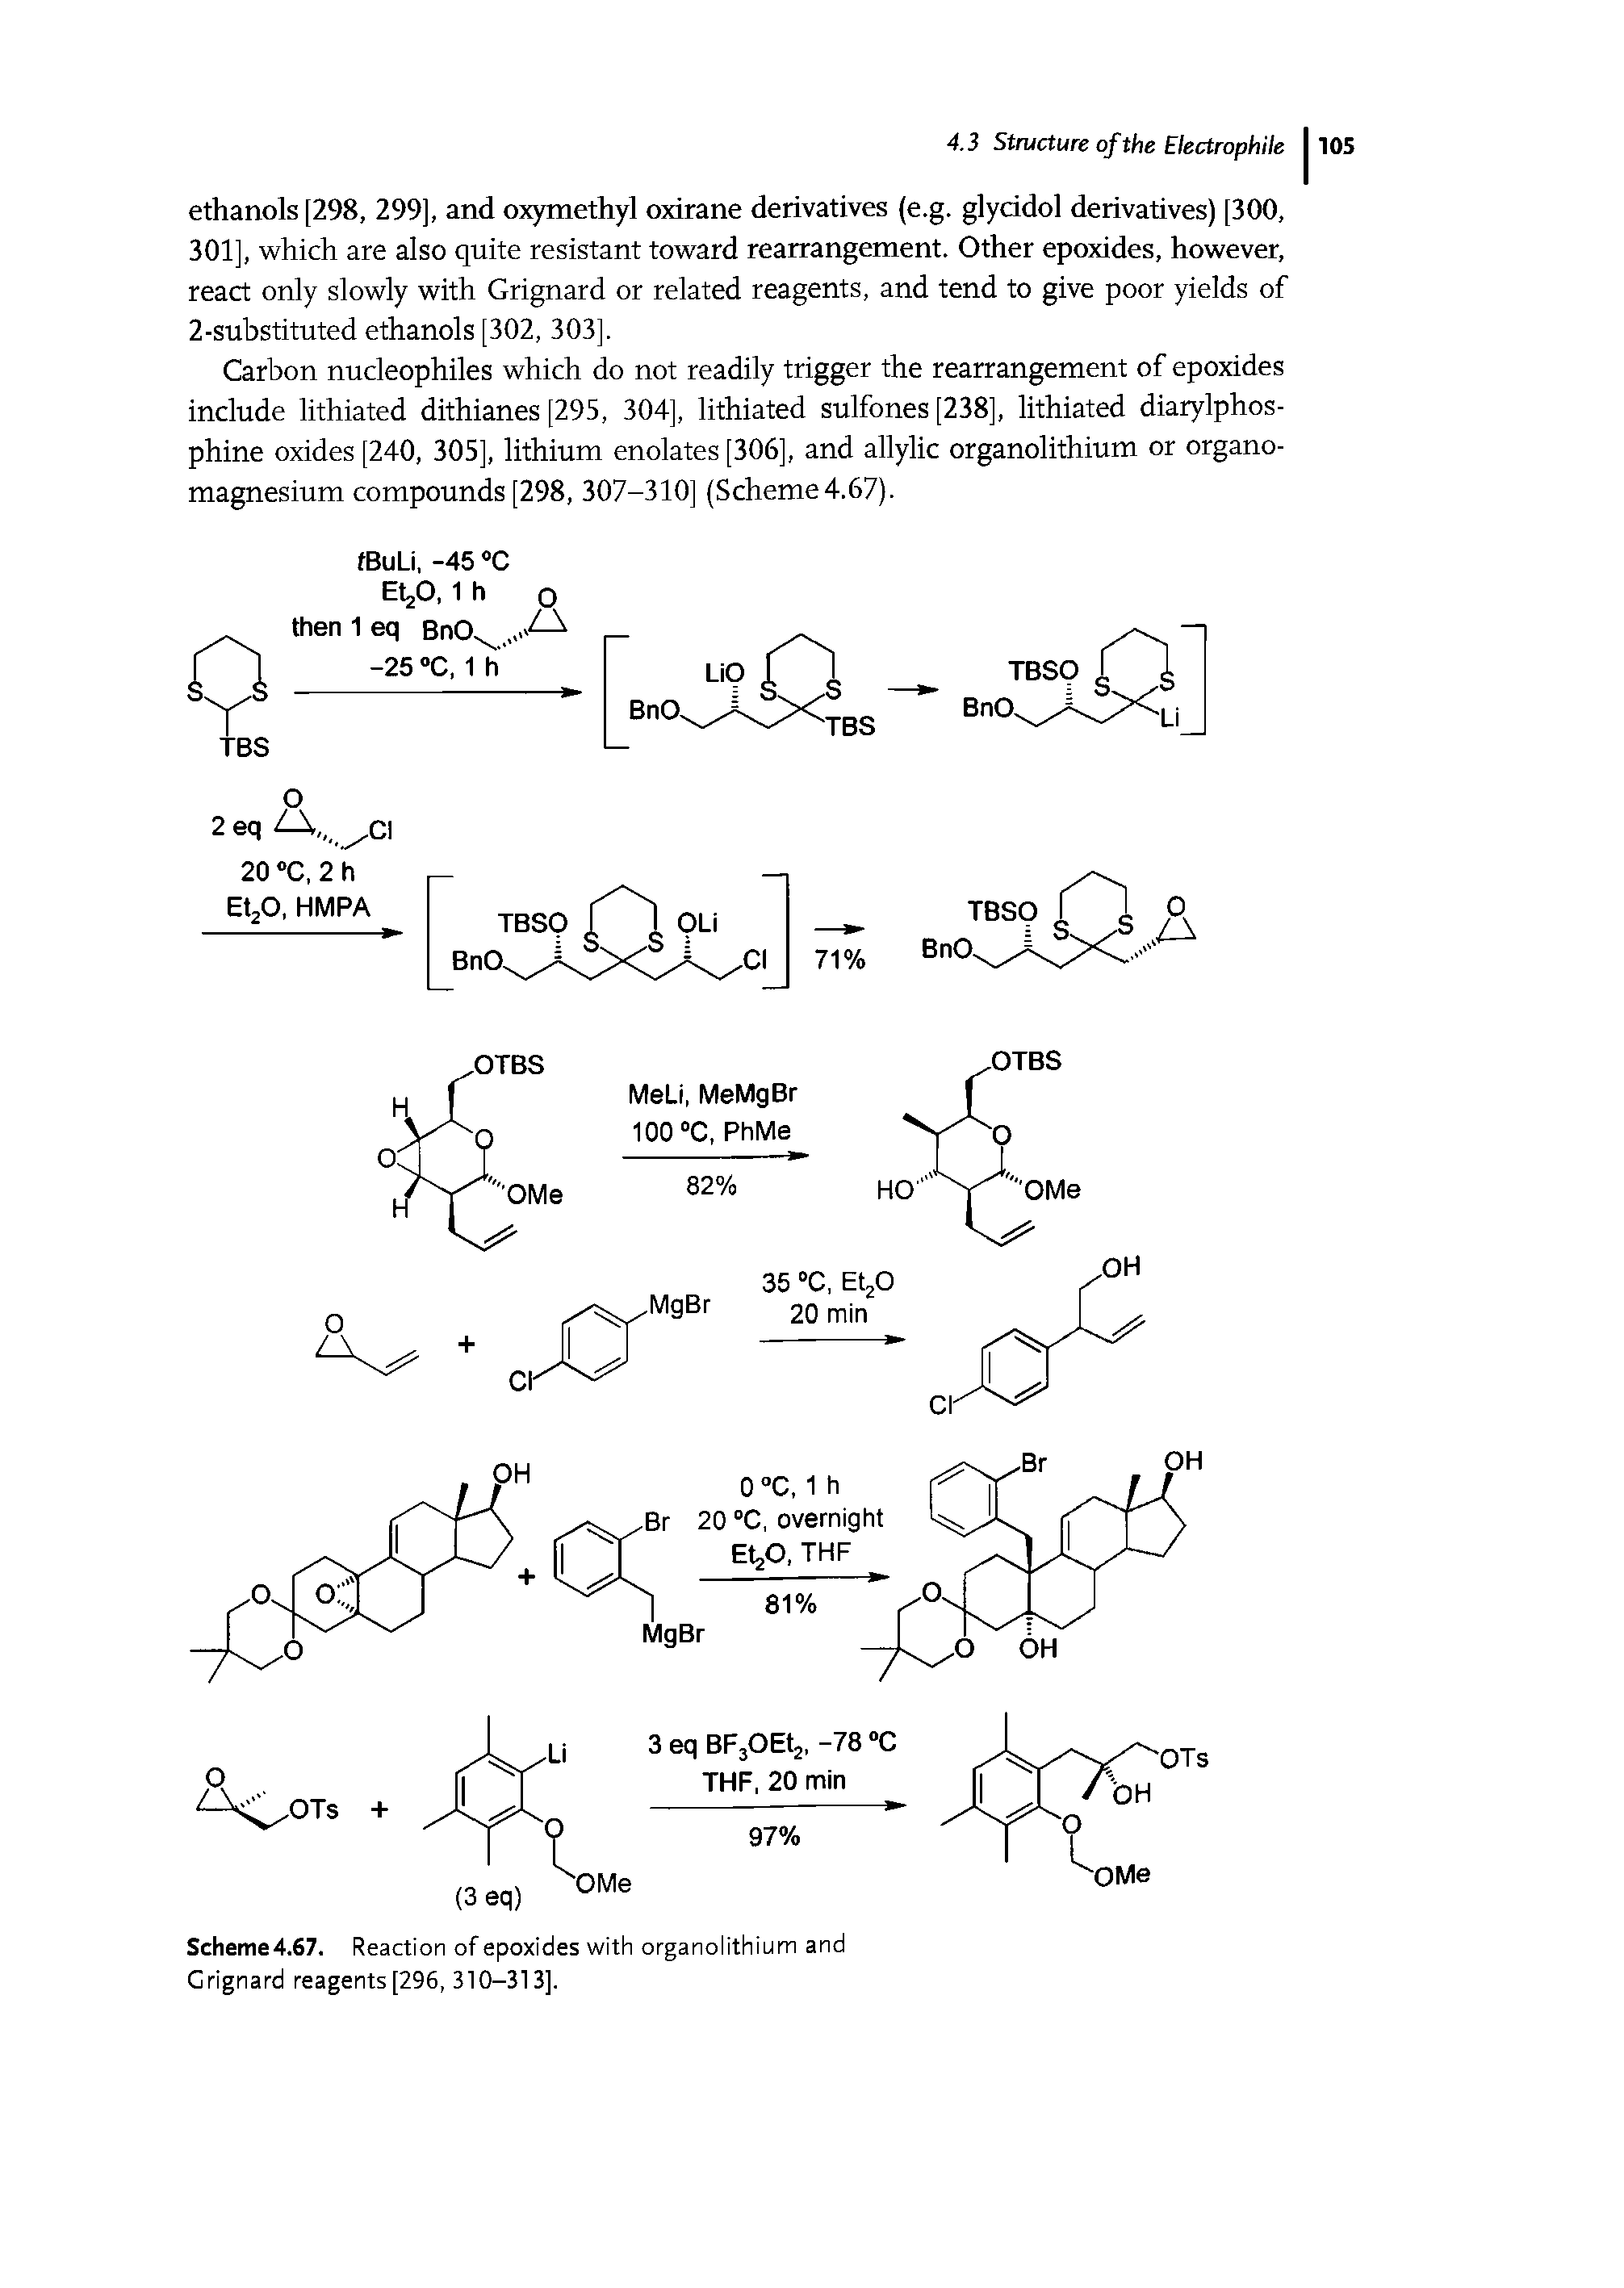 Scheme 4.67. Reaction of epoxides with organolithium and Grignard reagents[296, 310-313].